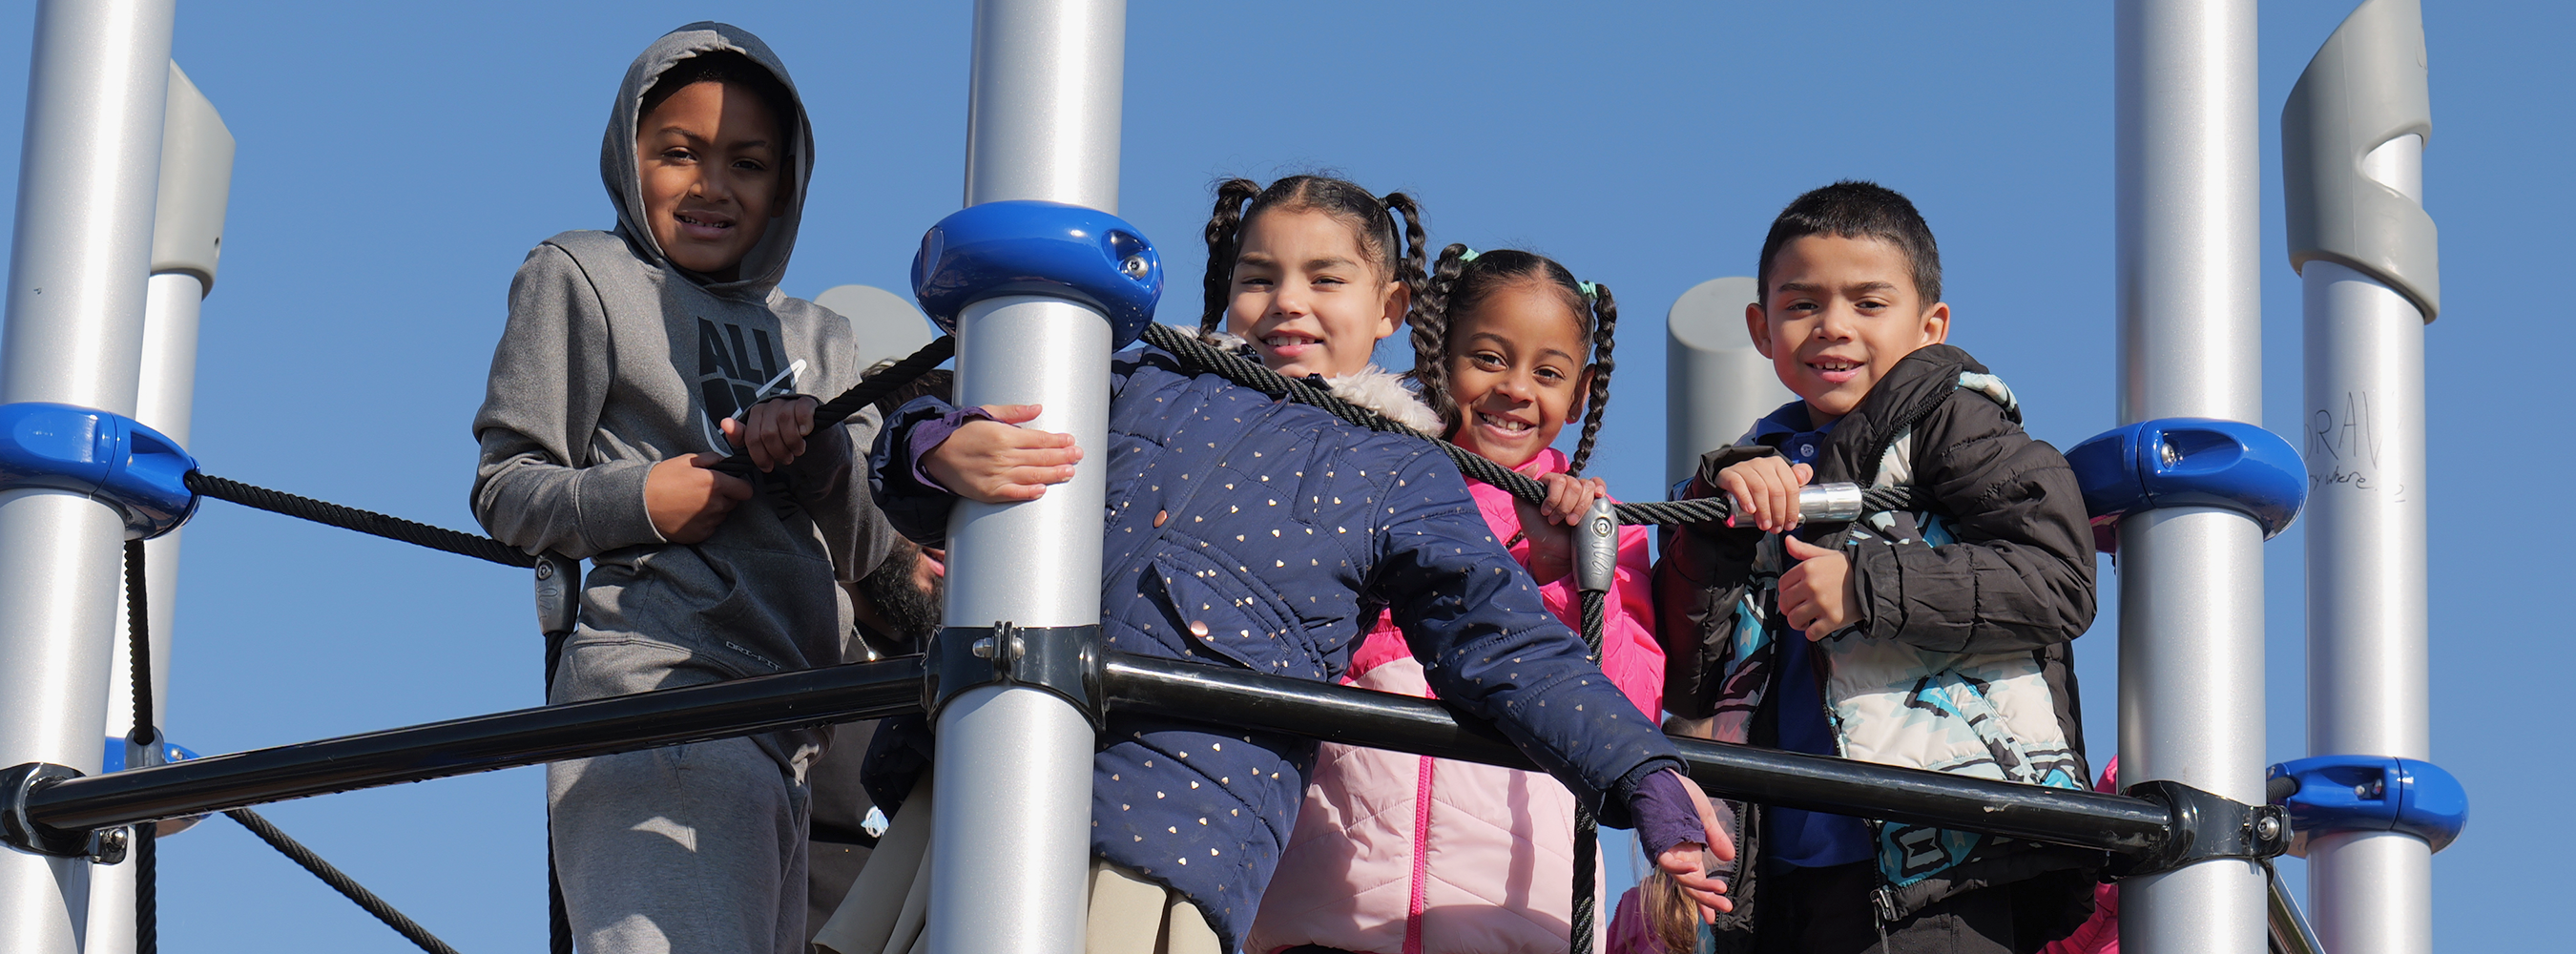 Children standing at top of playground equipment